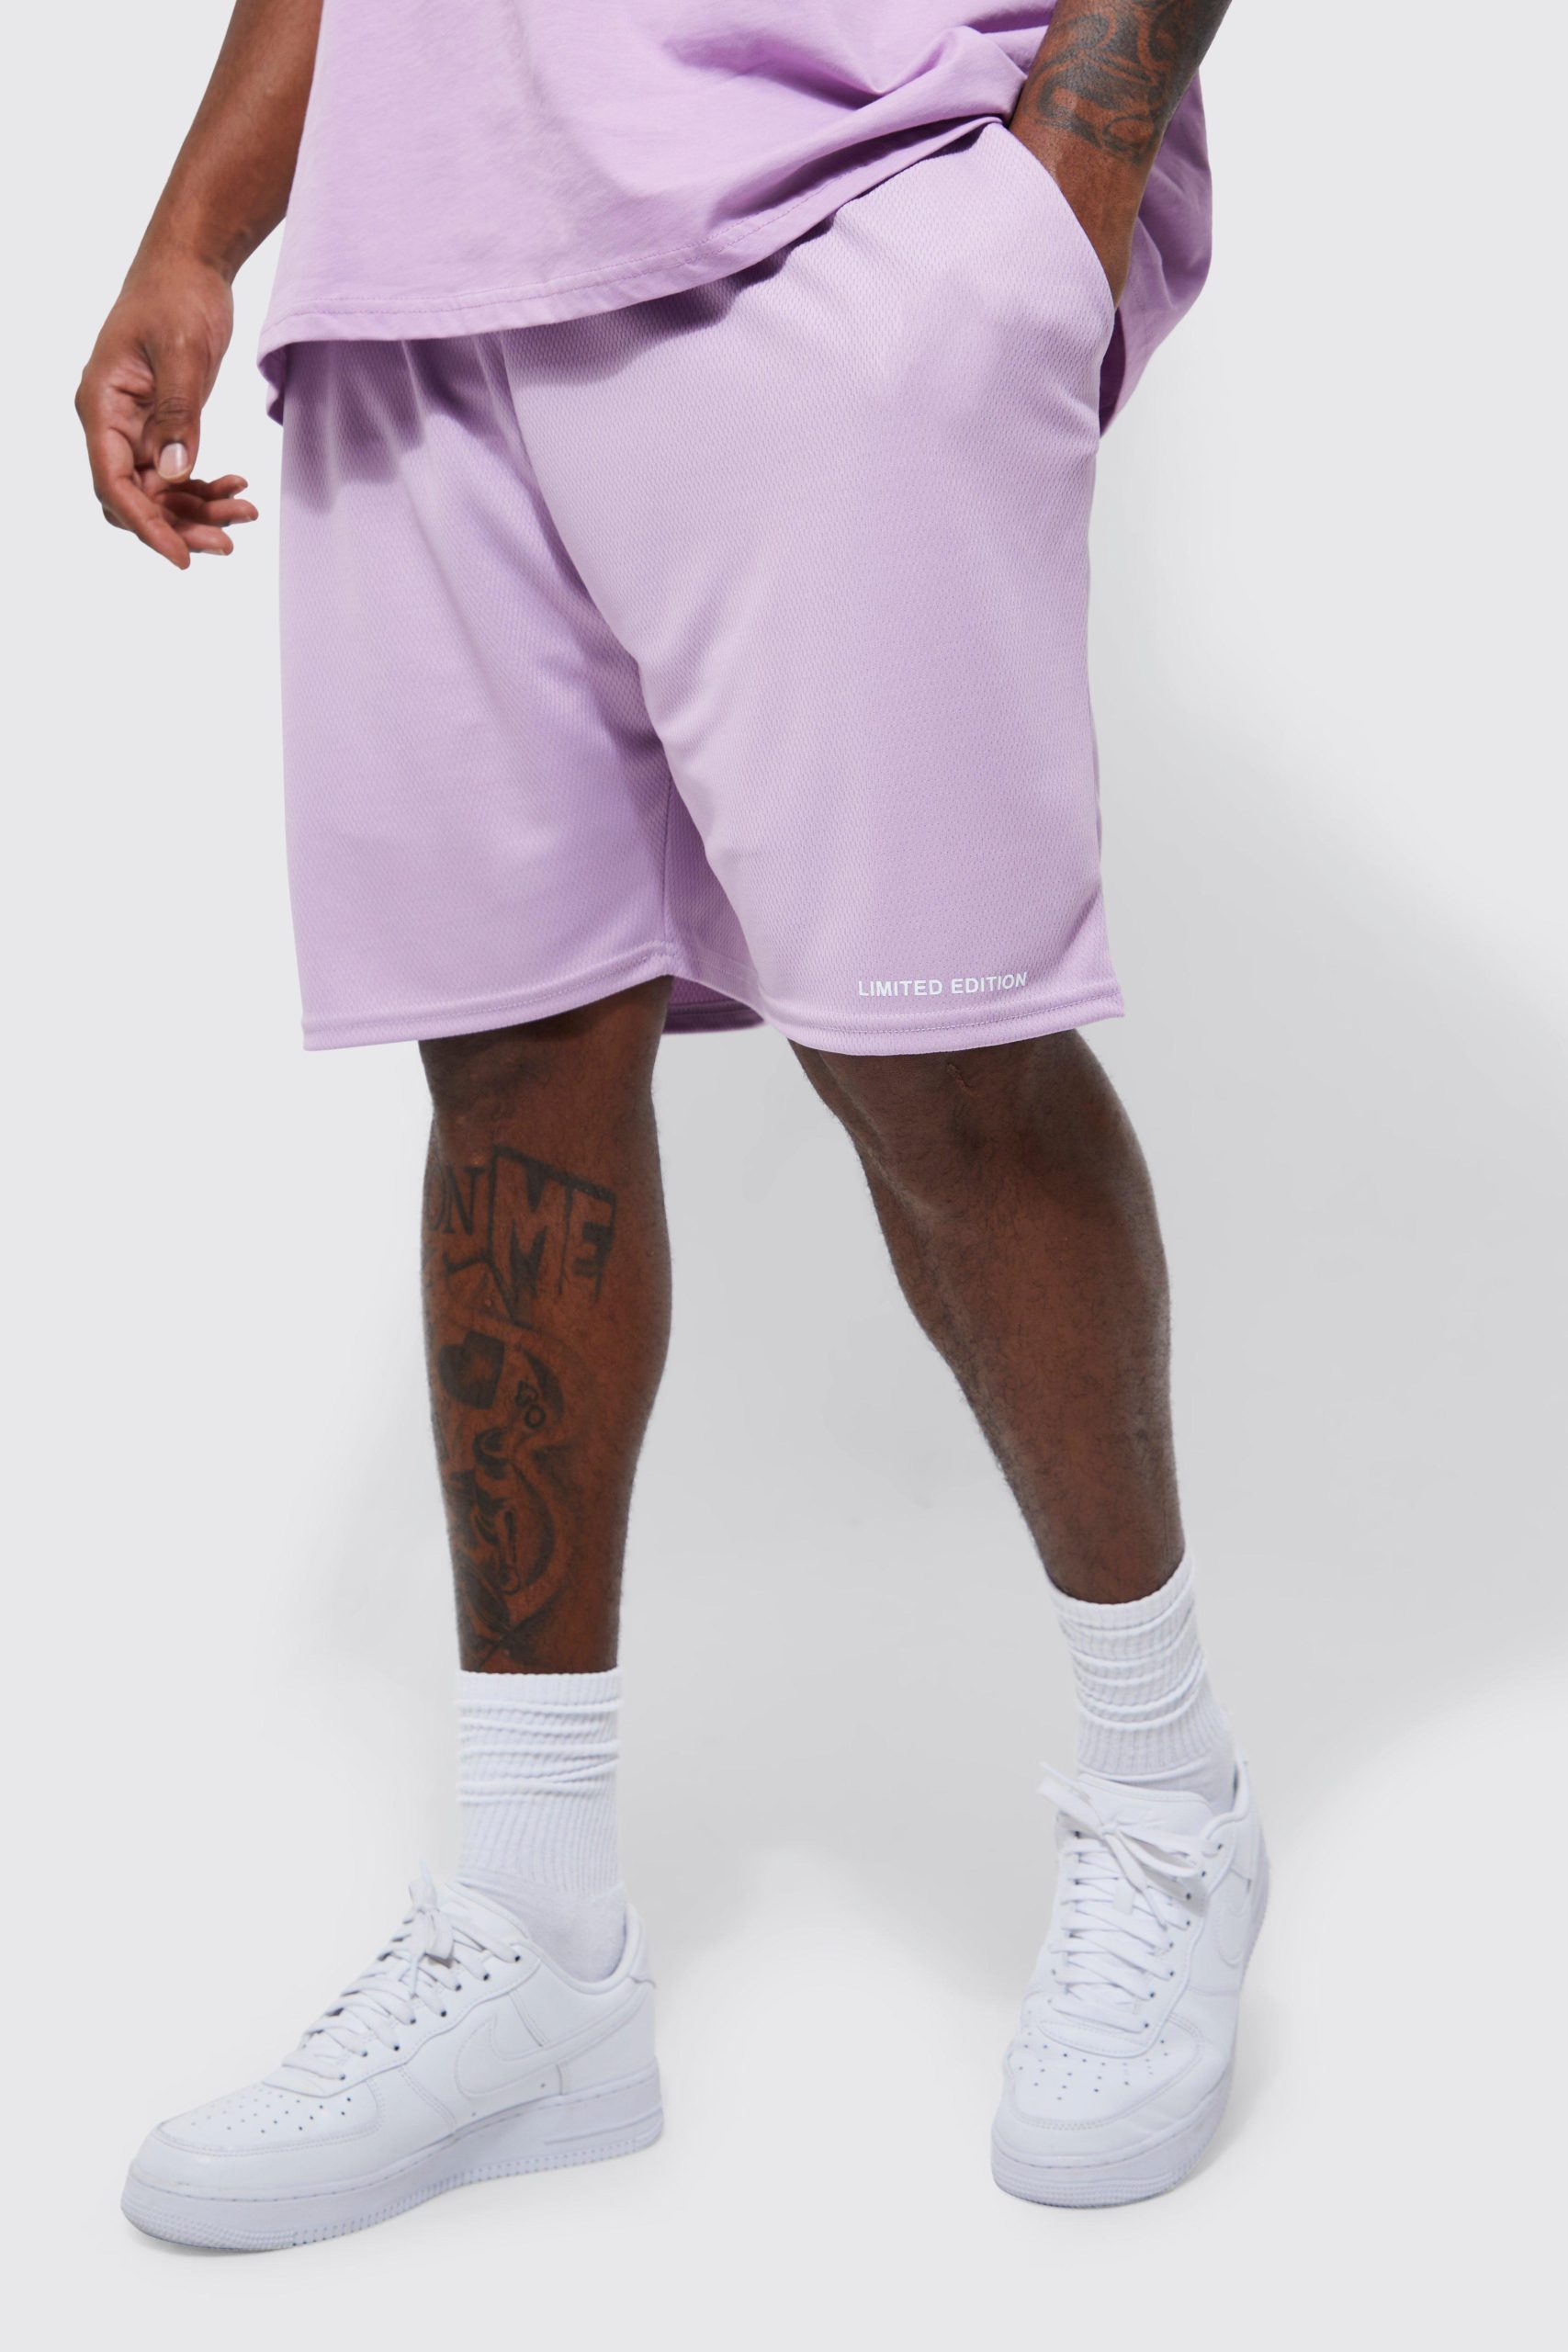 New Custom Mesh Shorts for Your Brand - Bewoda International ...